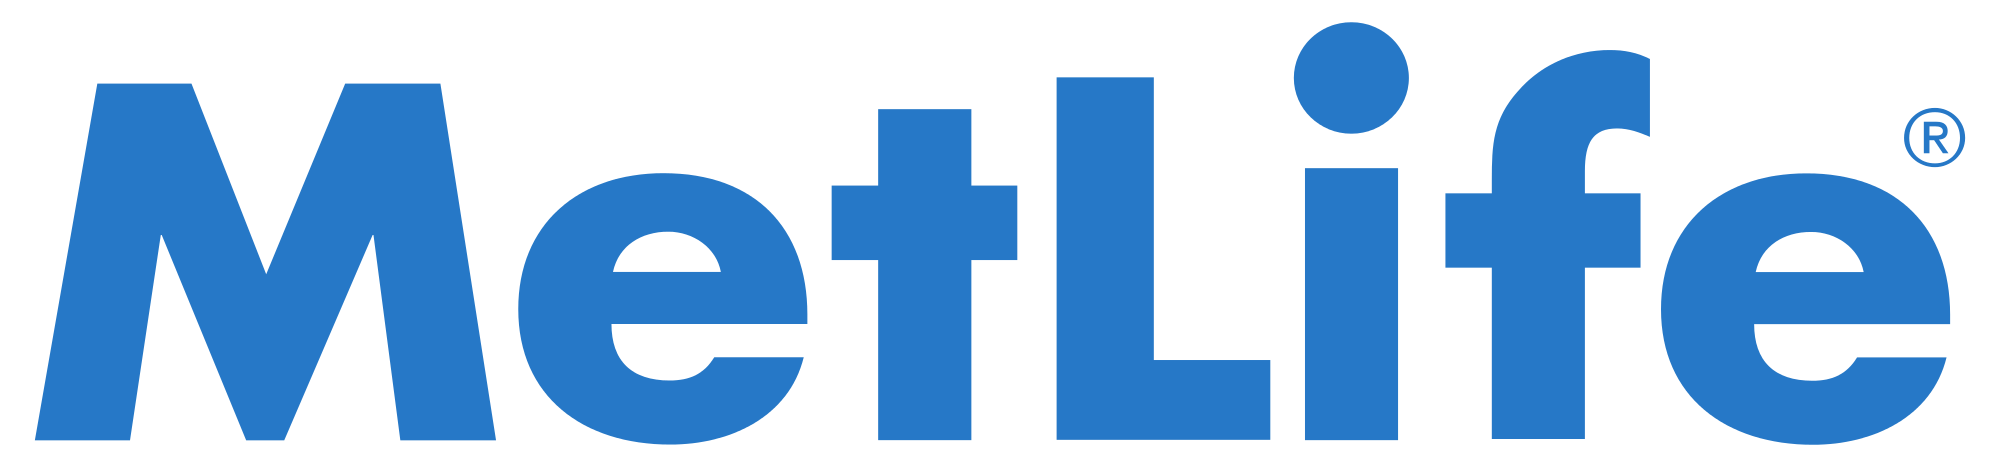 Met Life Insurance logo